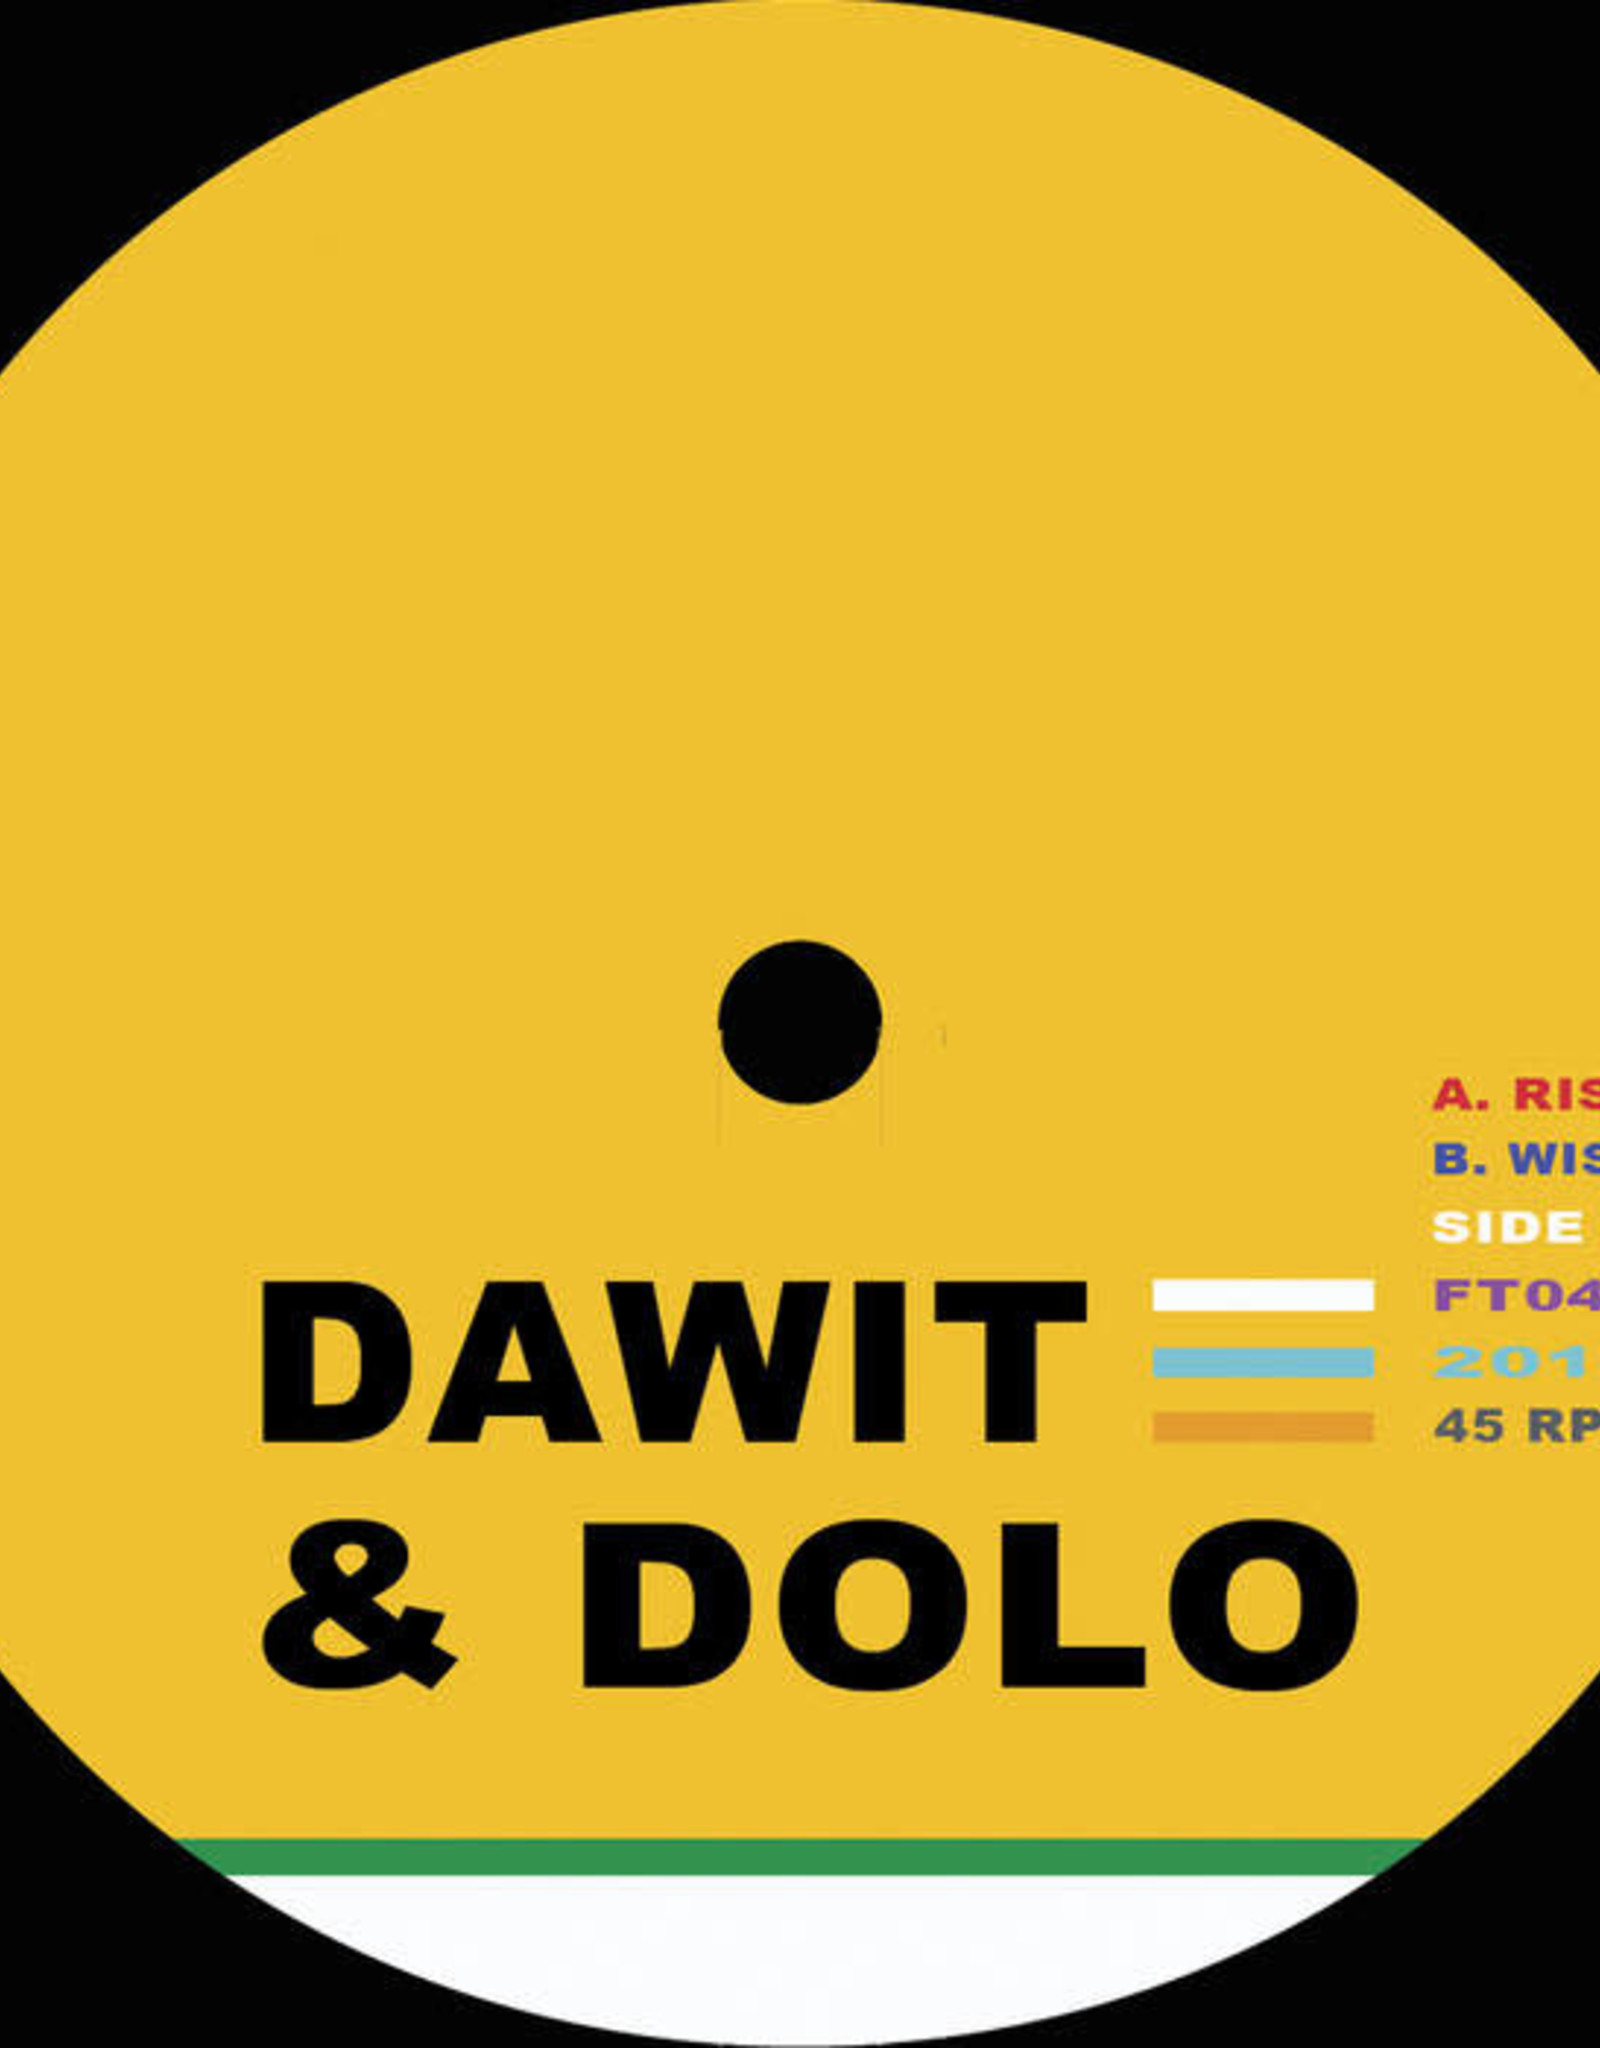 Dawit & Dolo - Rise/Wise